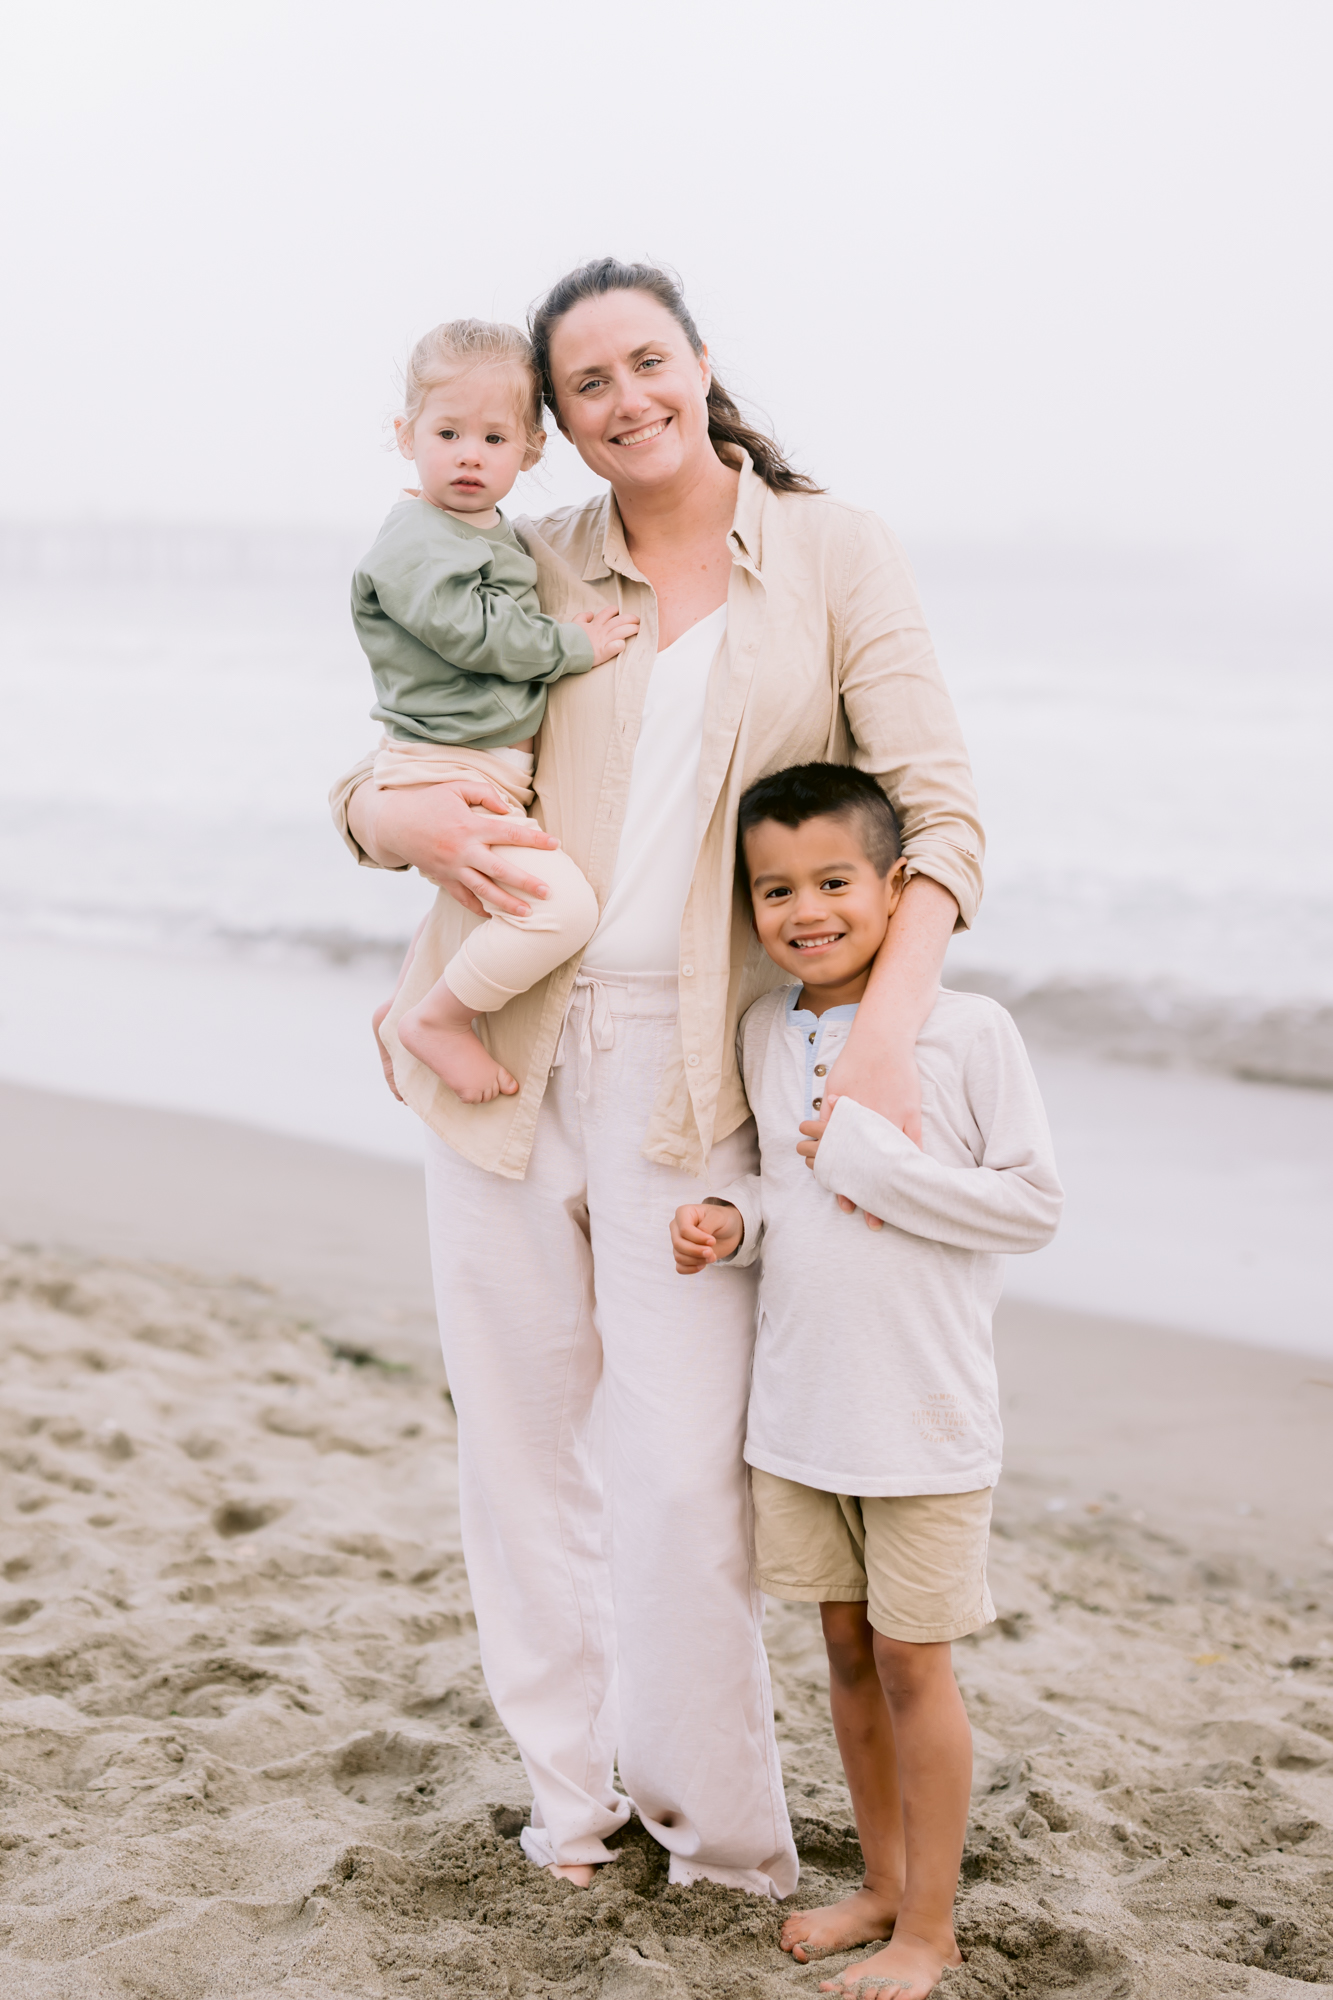 San Luis Obispo Nannies holding onto two young boys on the beach